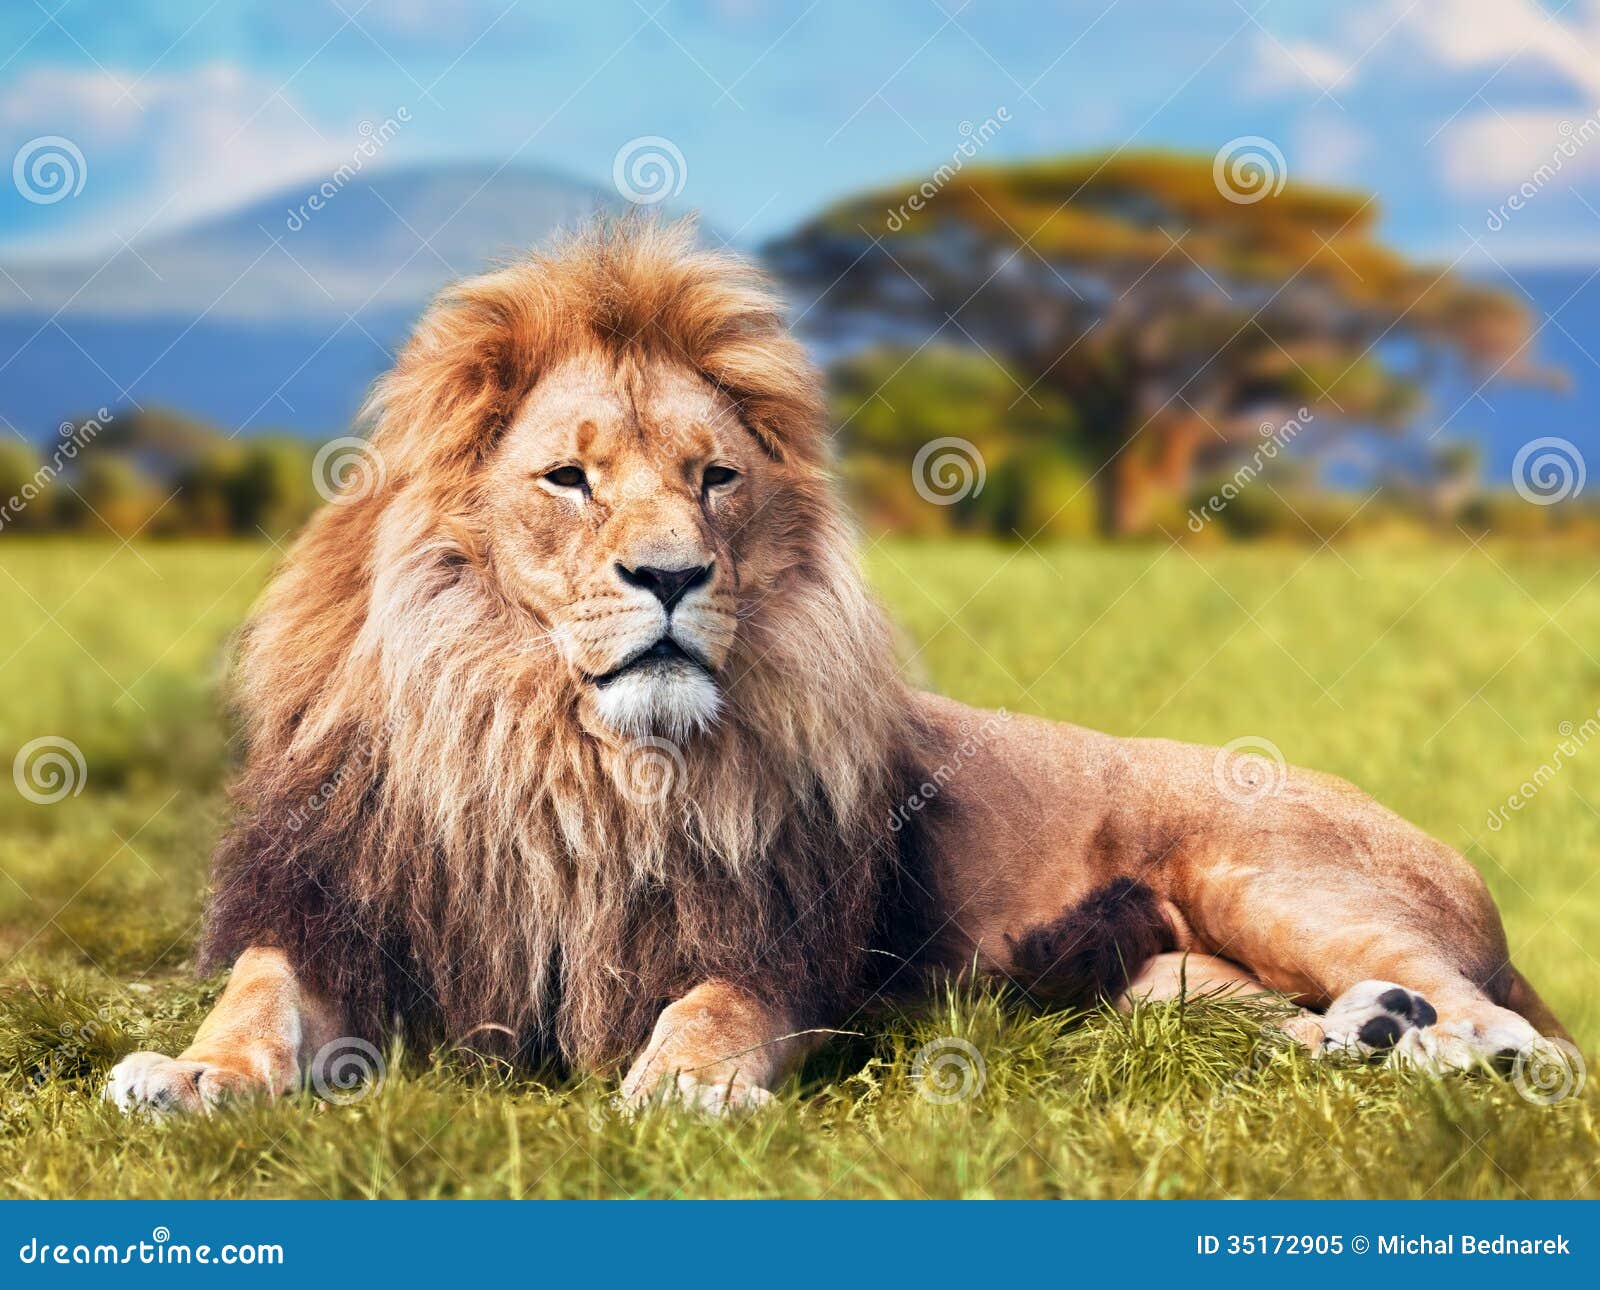 big lion lying on savannah grass